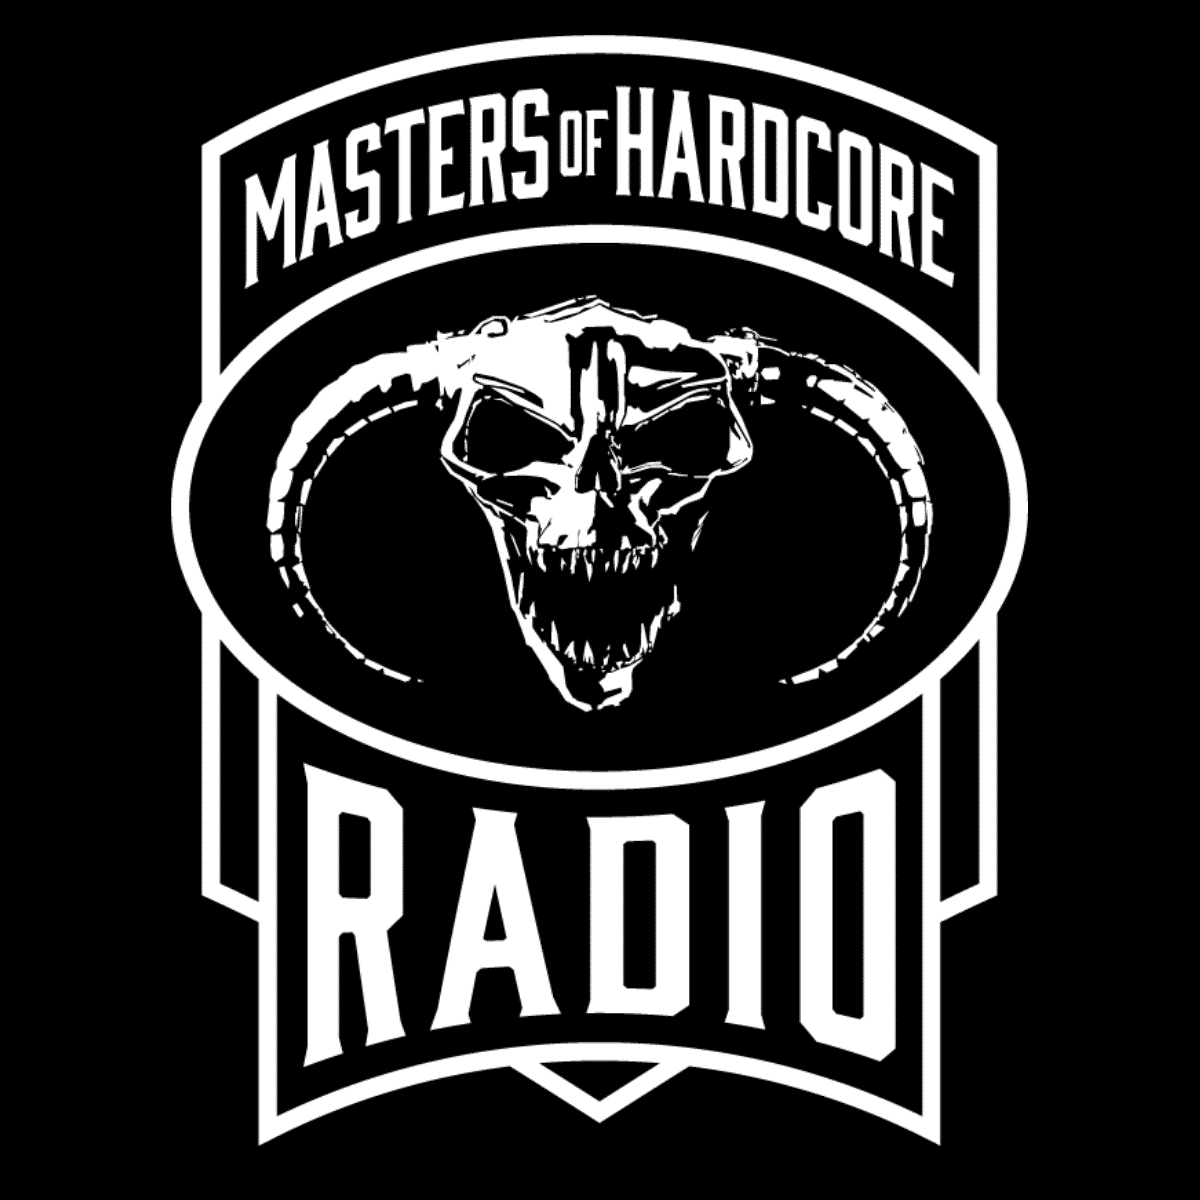 Masters of Hardcore radio